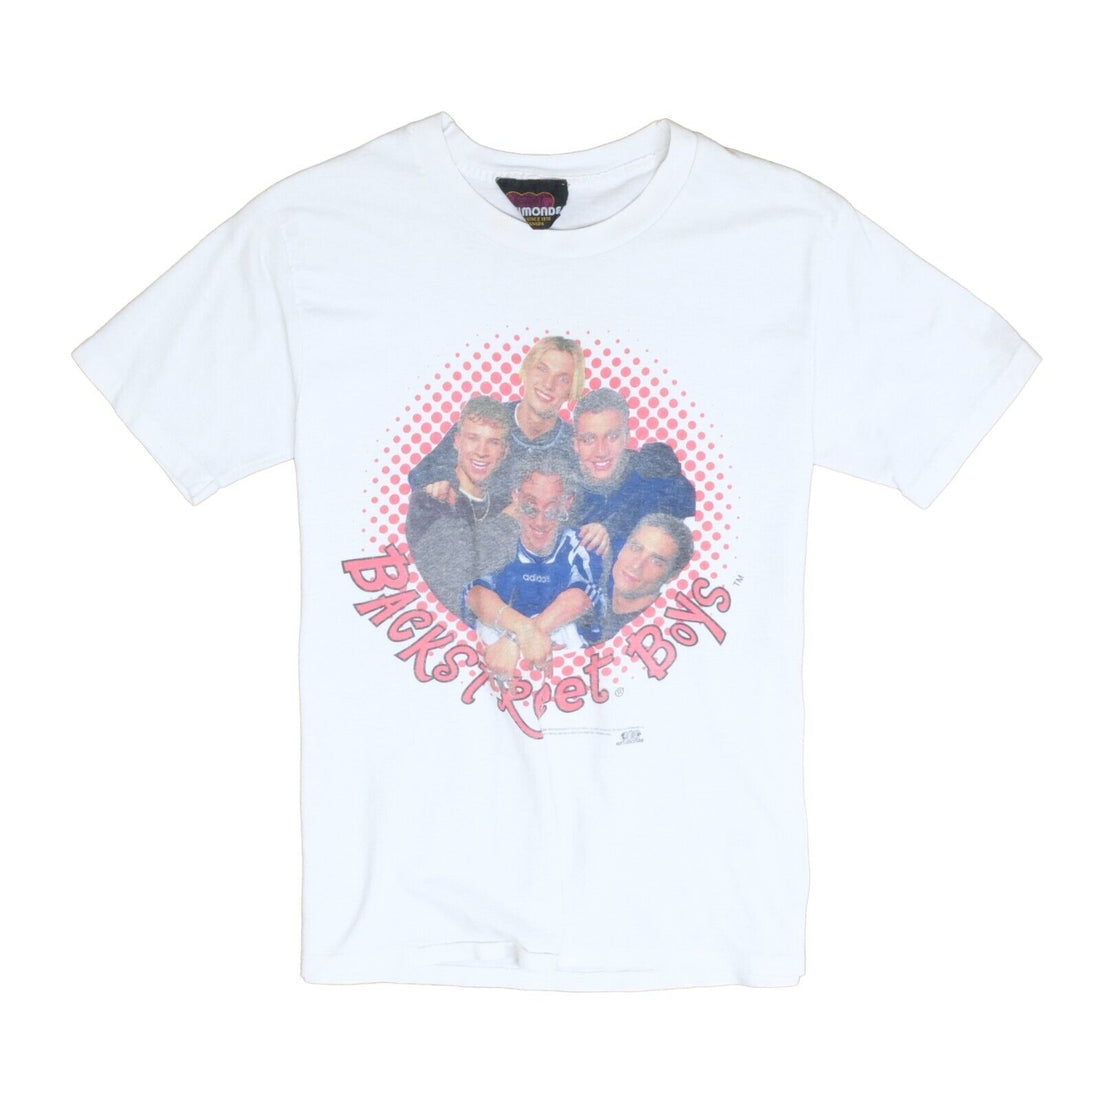 Vintage Backstreet Boys Artimonde T-Shirt Size XS Boy Band Tee 1996 90s